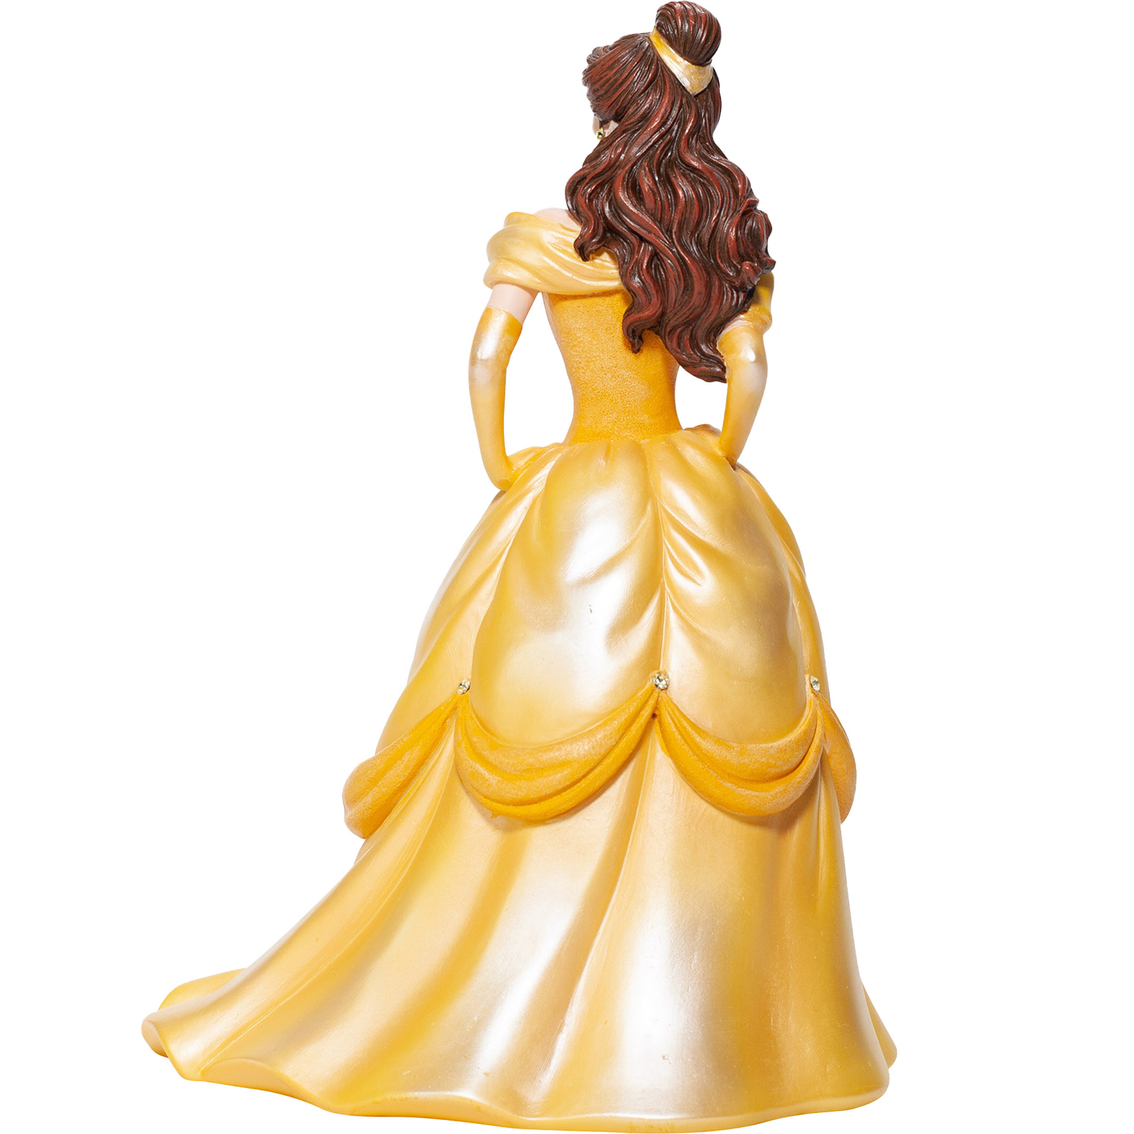 Disney Showcase Couture de Force Belle Figurine - Image 6 of 6